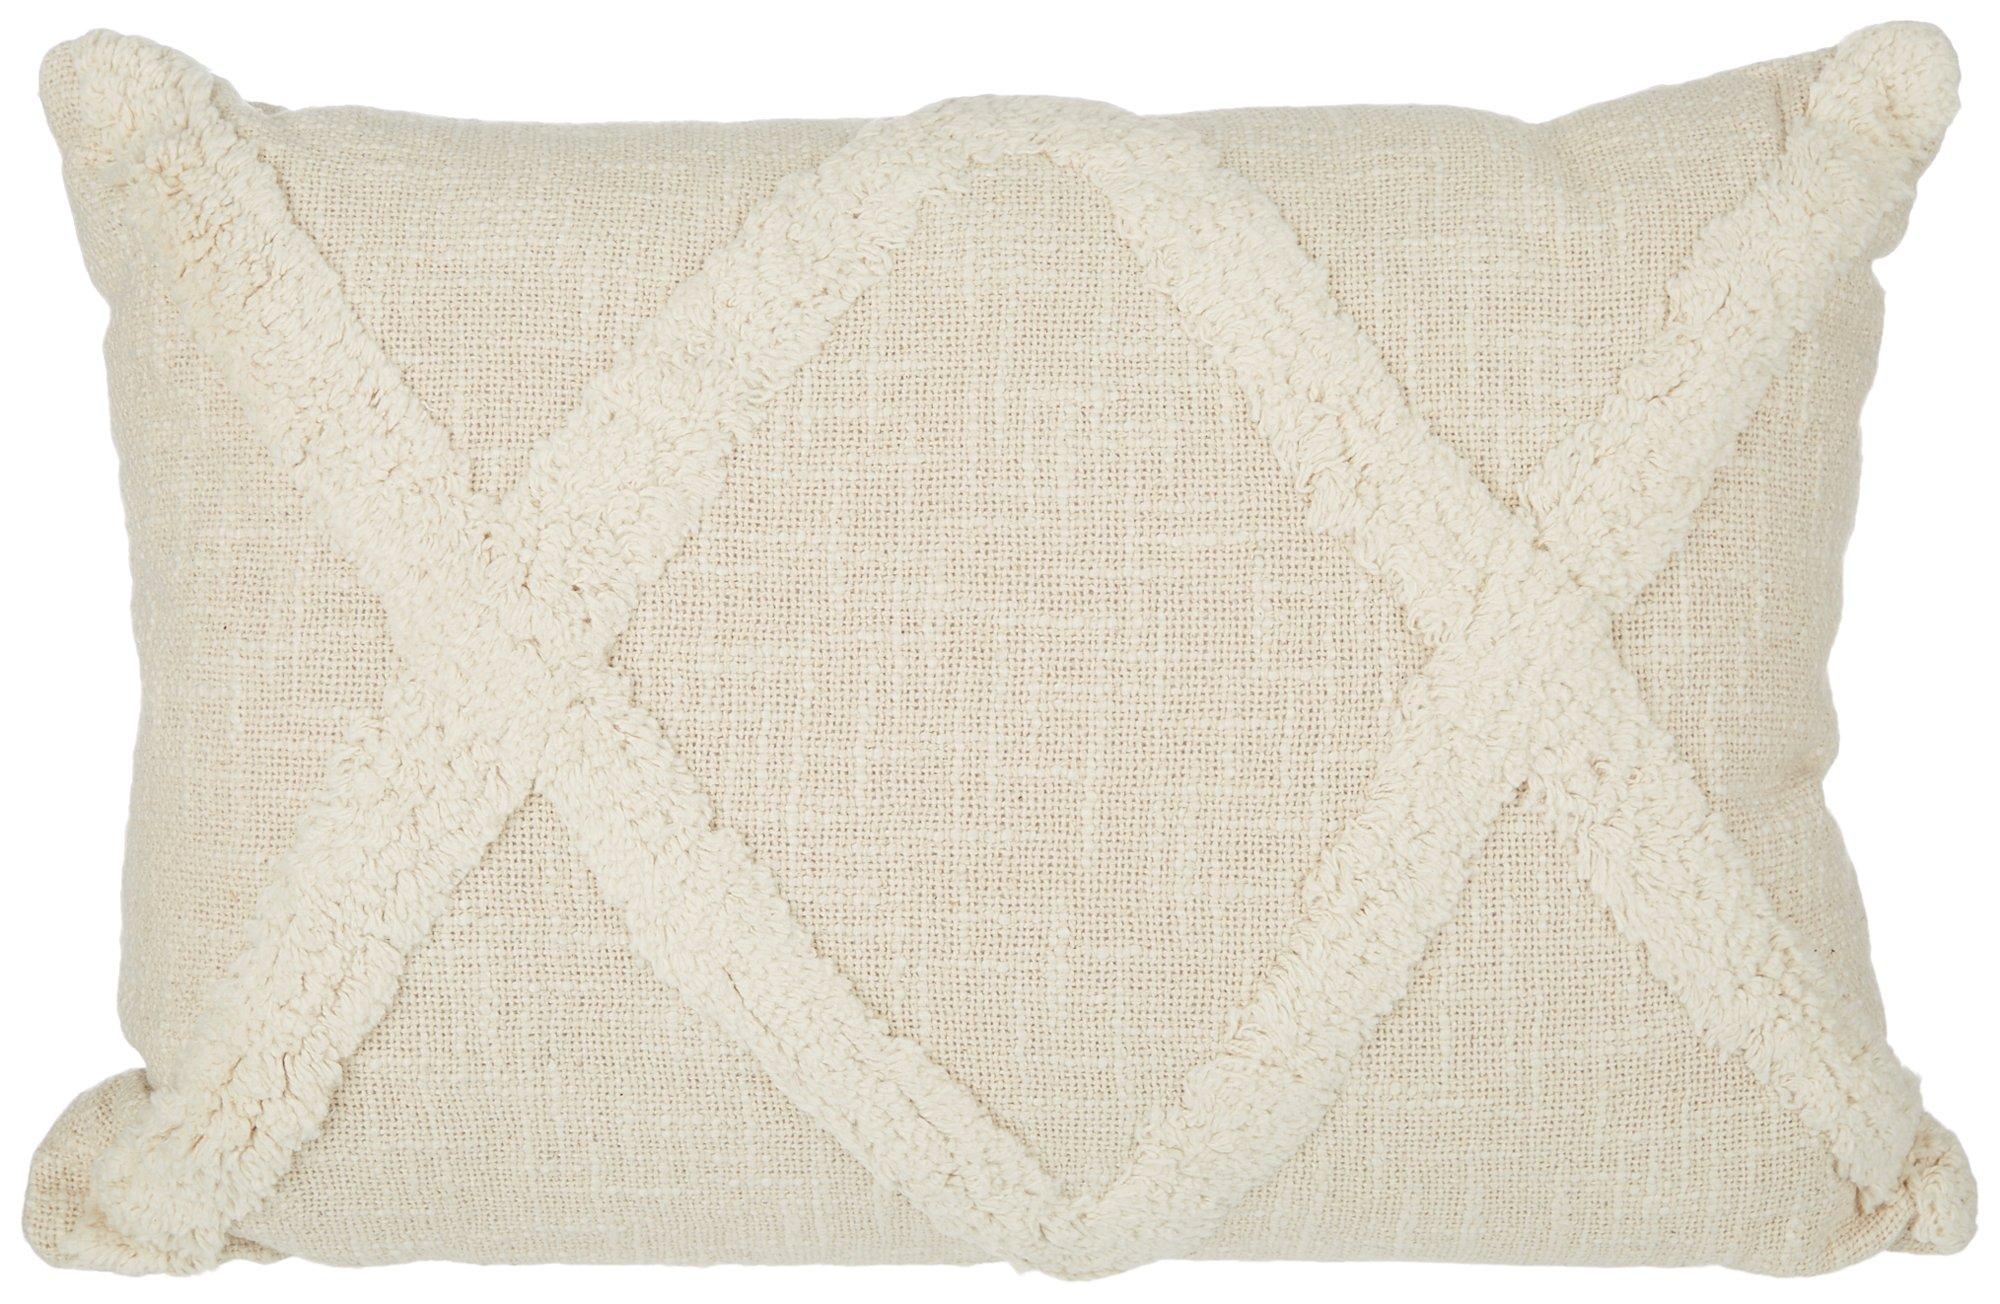 14x20 Diamond Tufted Decorative Pillow